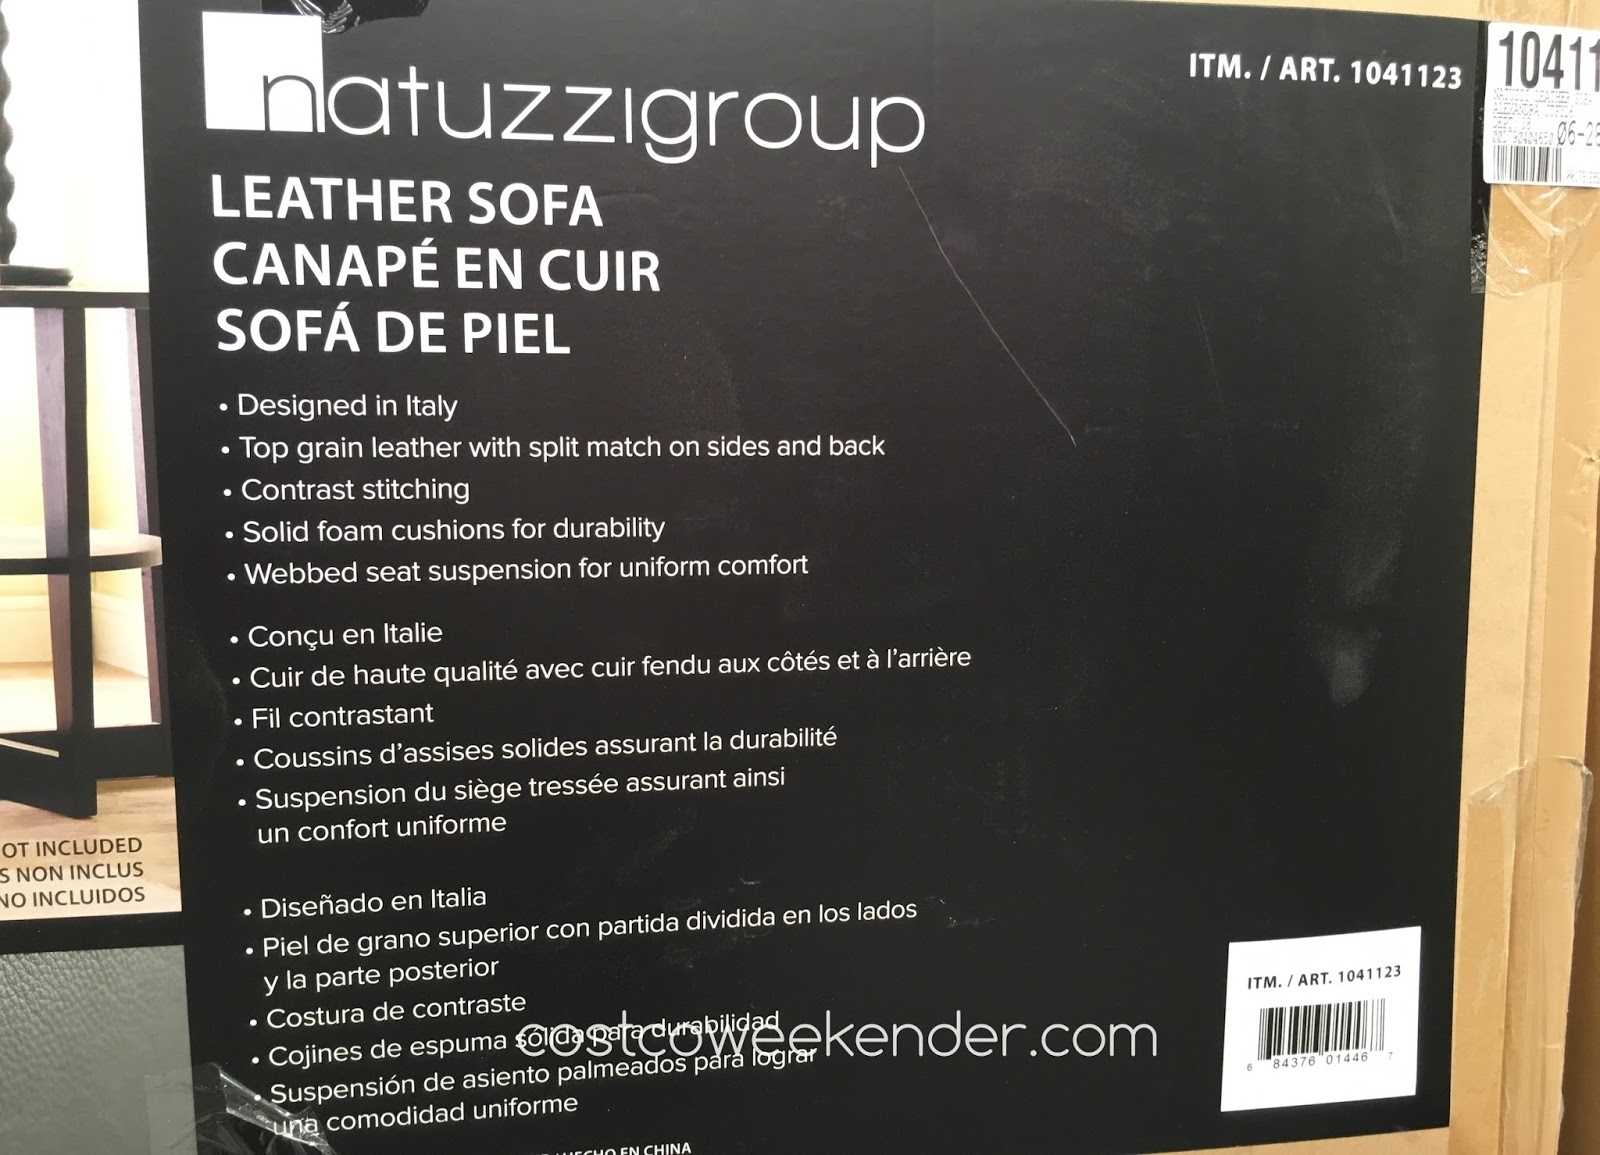 natuzzi group leather sofa 1041123